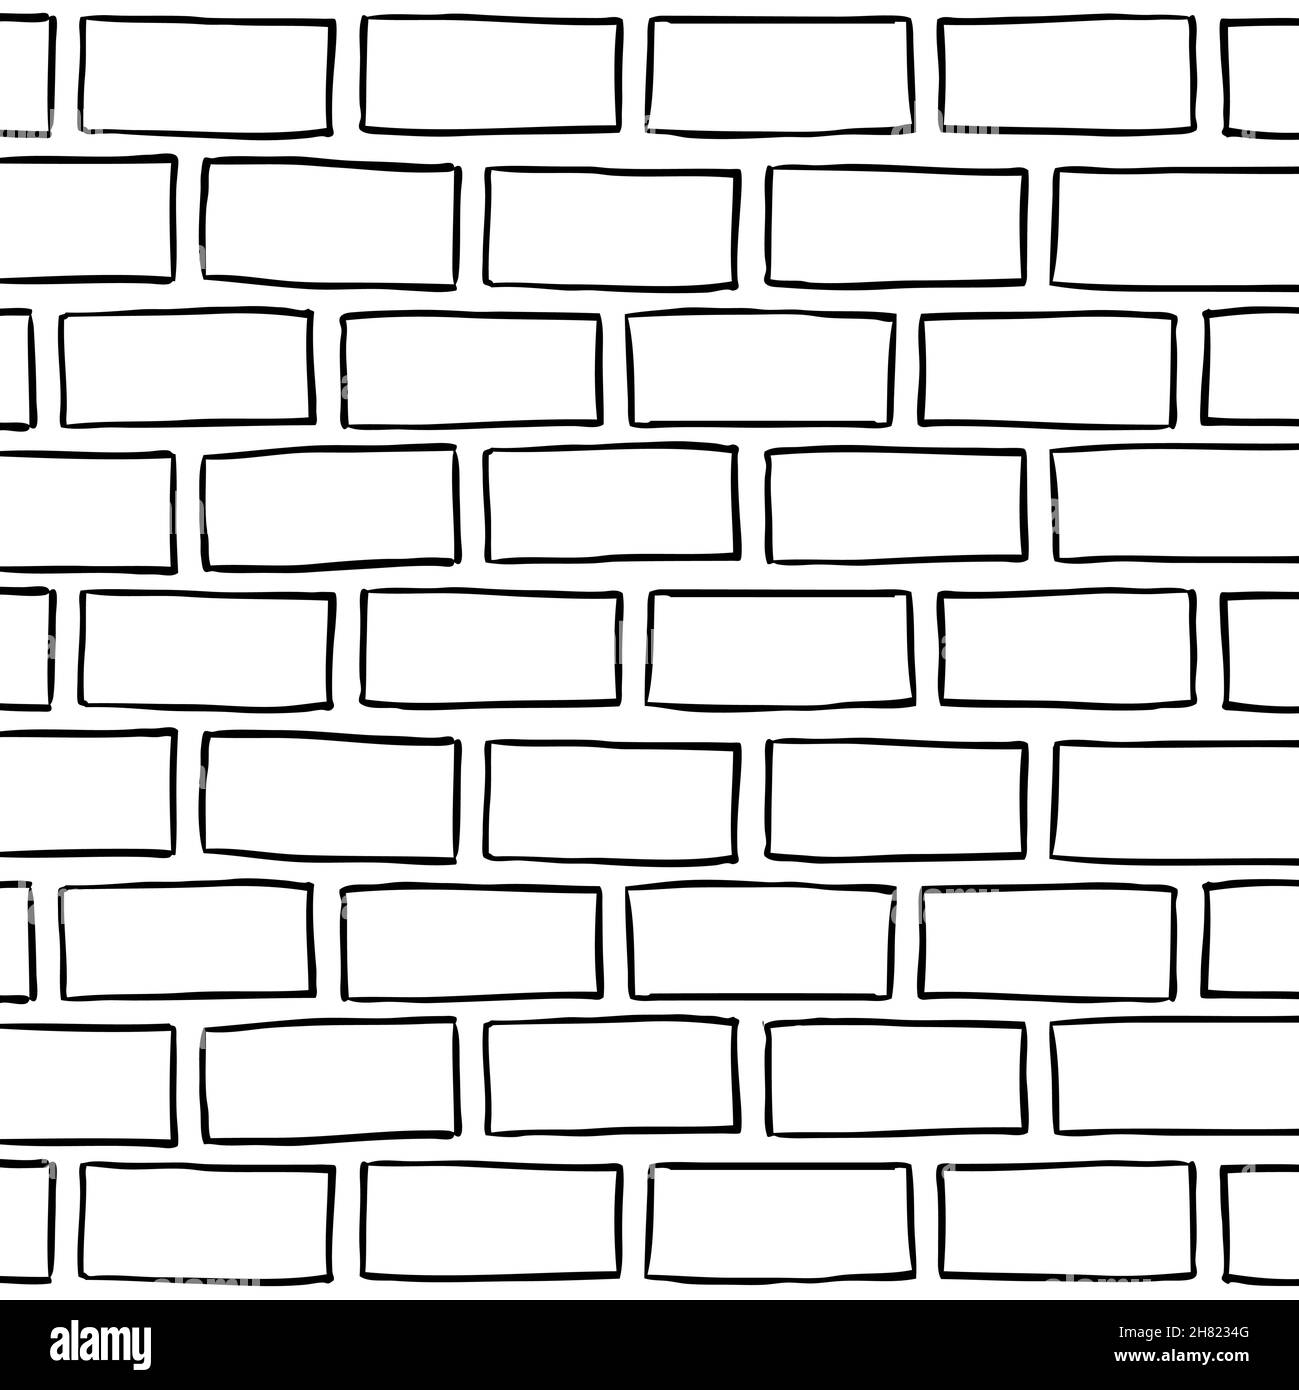 Brick wall background. Vector illustration Stock Vector